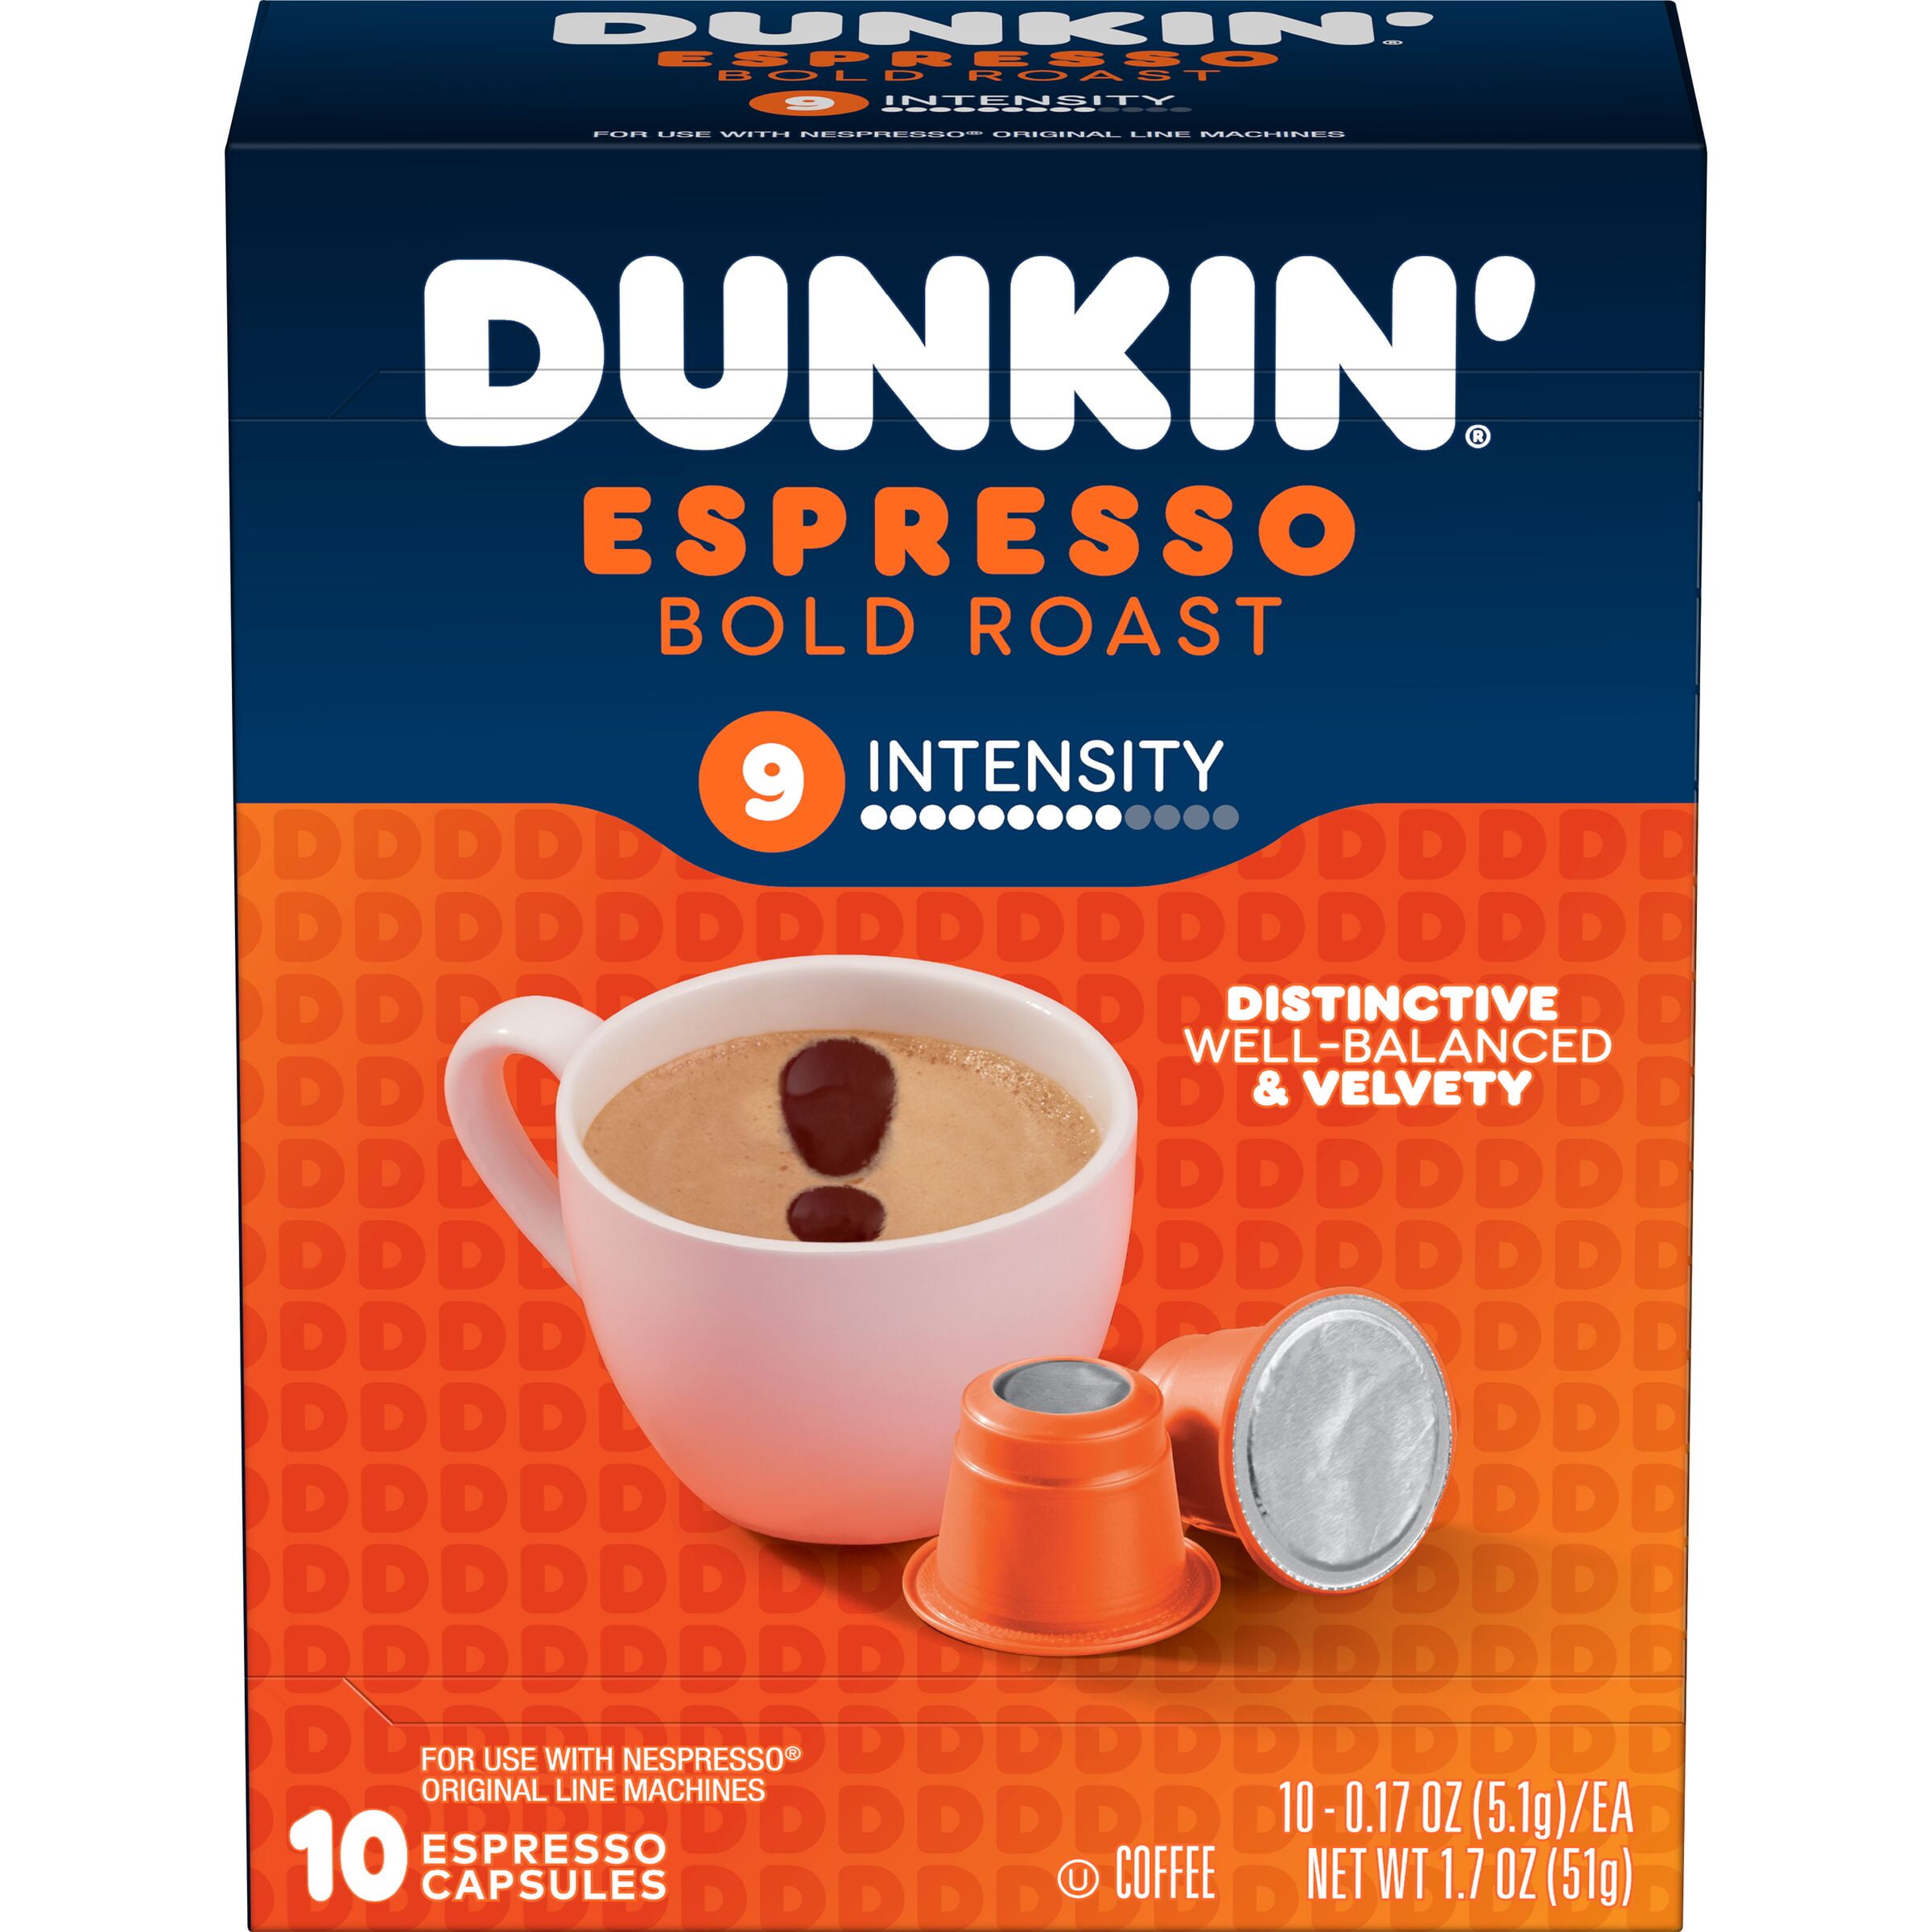 Dunkin Espresso Bold Roast Coffee, 10 Count Capsules for Espresso Machines, 9 Intensity